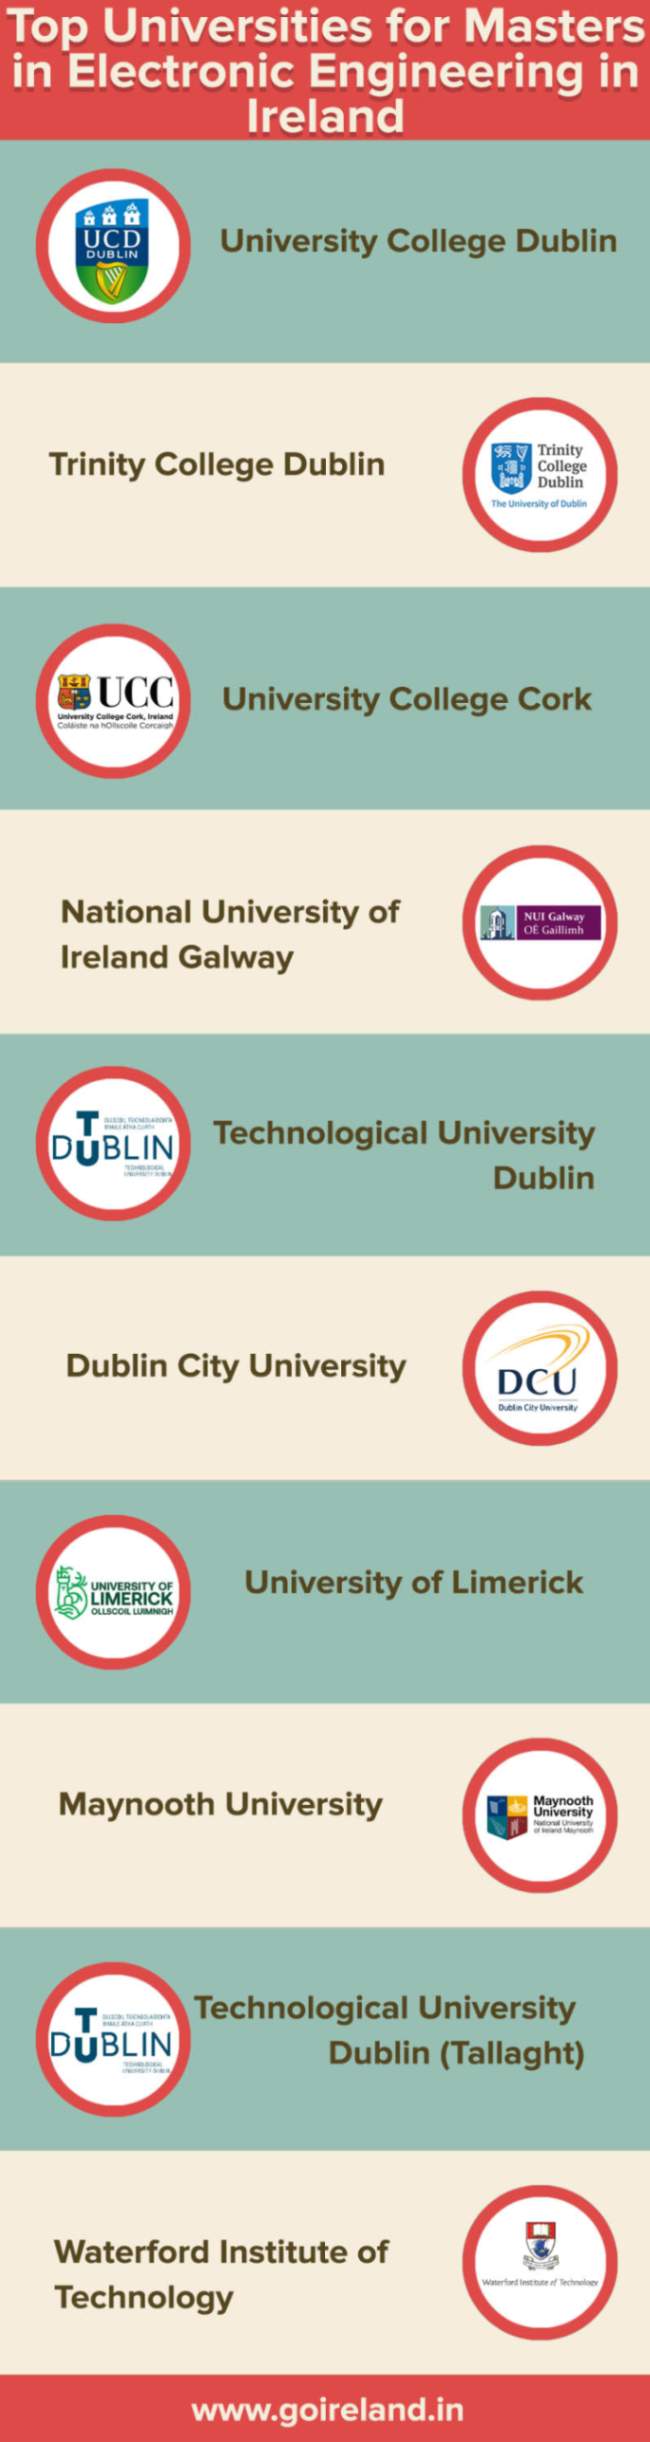 Top Universities for Masters in Electronic Engineering in Ireland